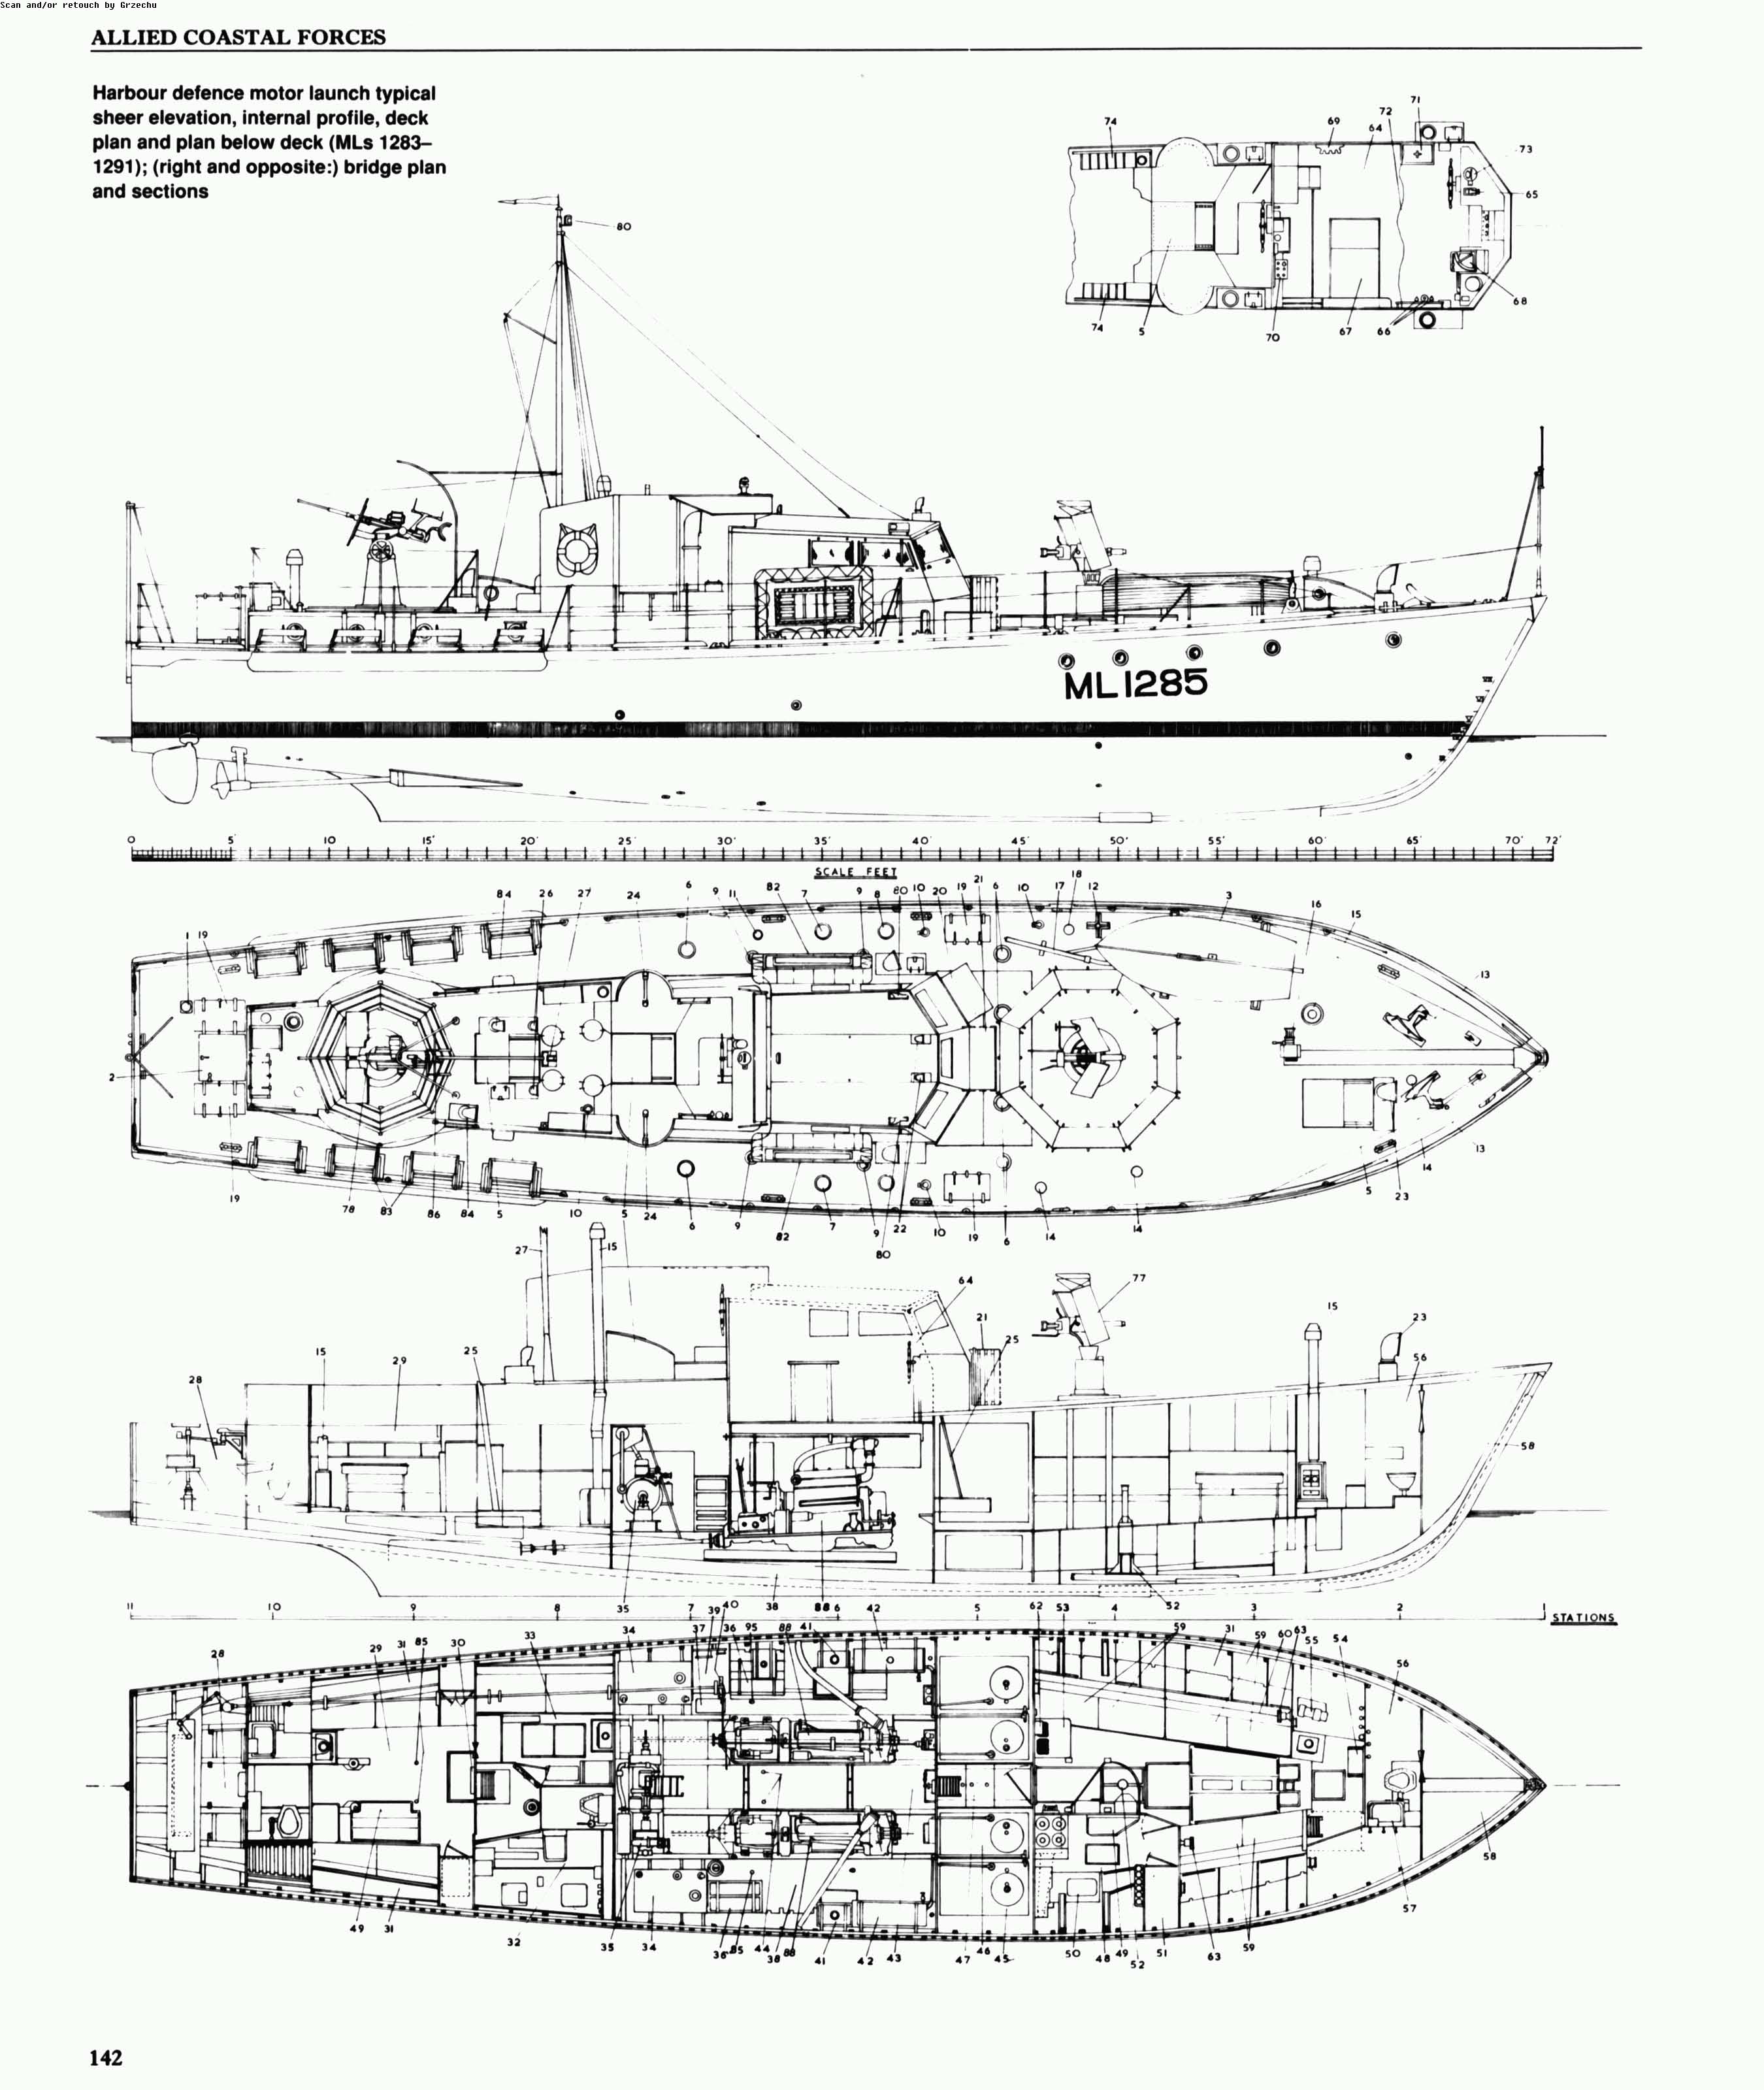 Allied Coastal Forces of World War II (1) Fairmile designs & U.S. submarine chasers_Page_144.jpg